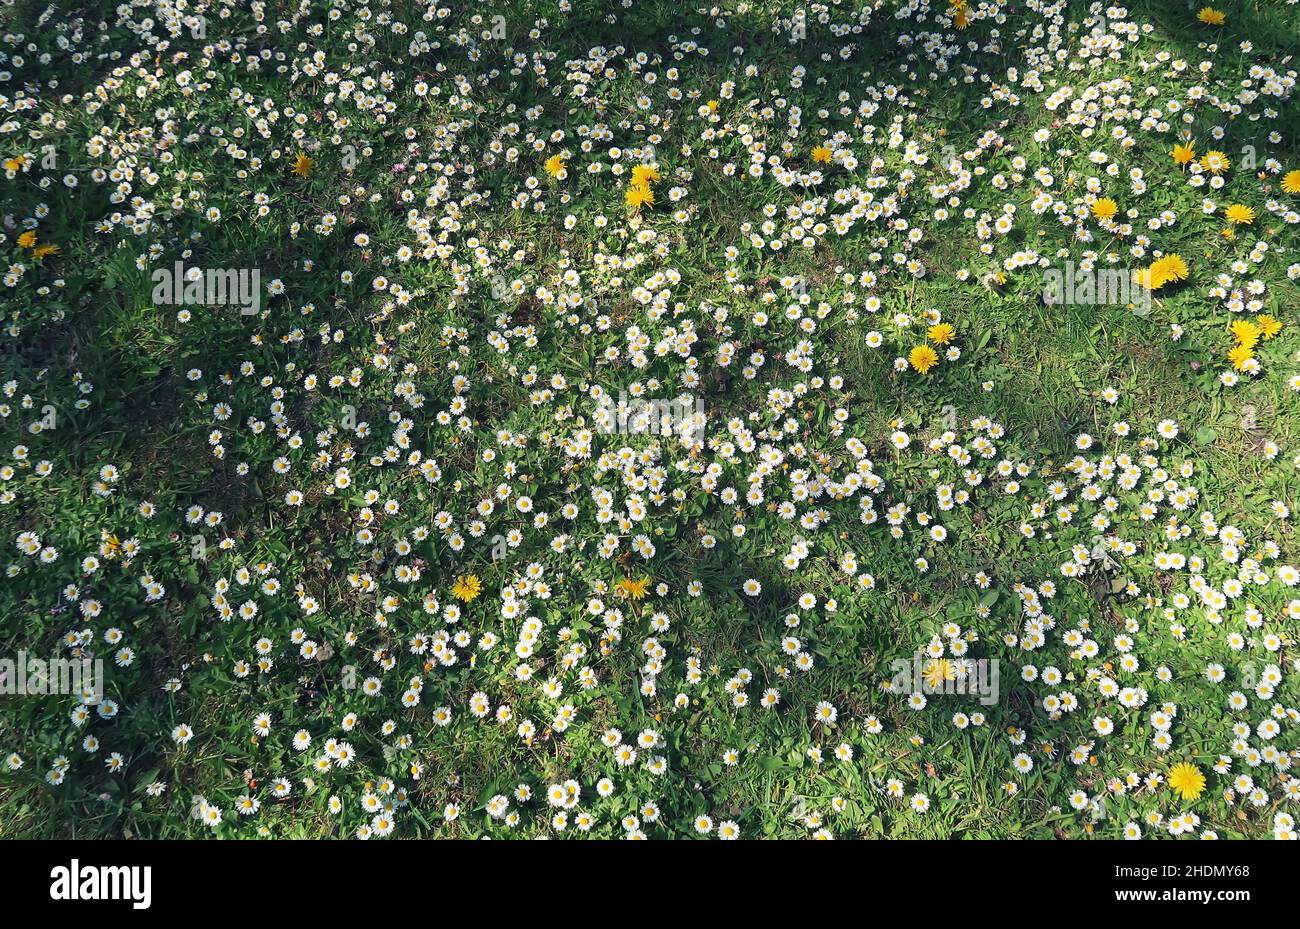 6x Daisy Bunches Joblot Artificial Fake Wild Meadow Flowers Garden Plant Daisies 